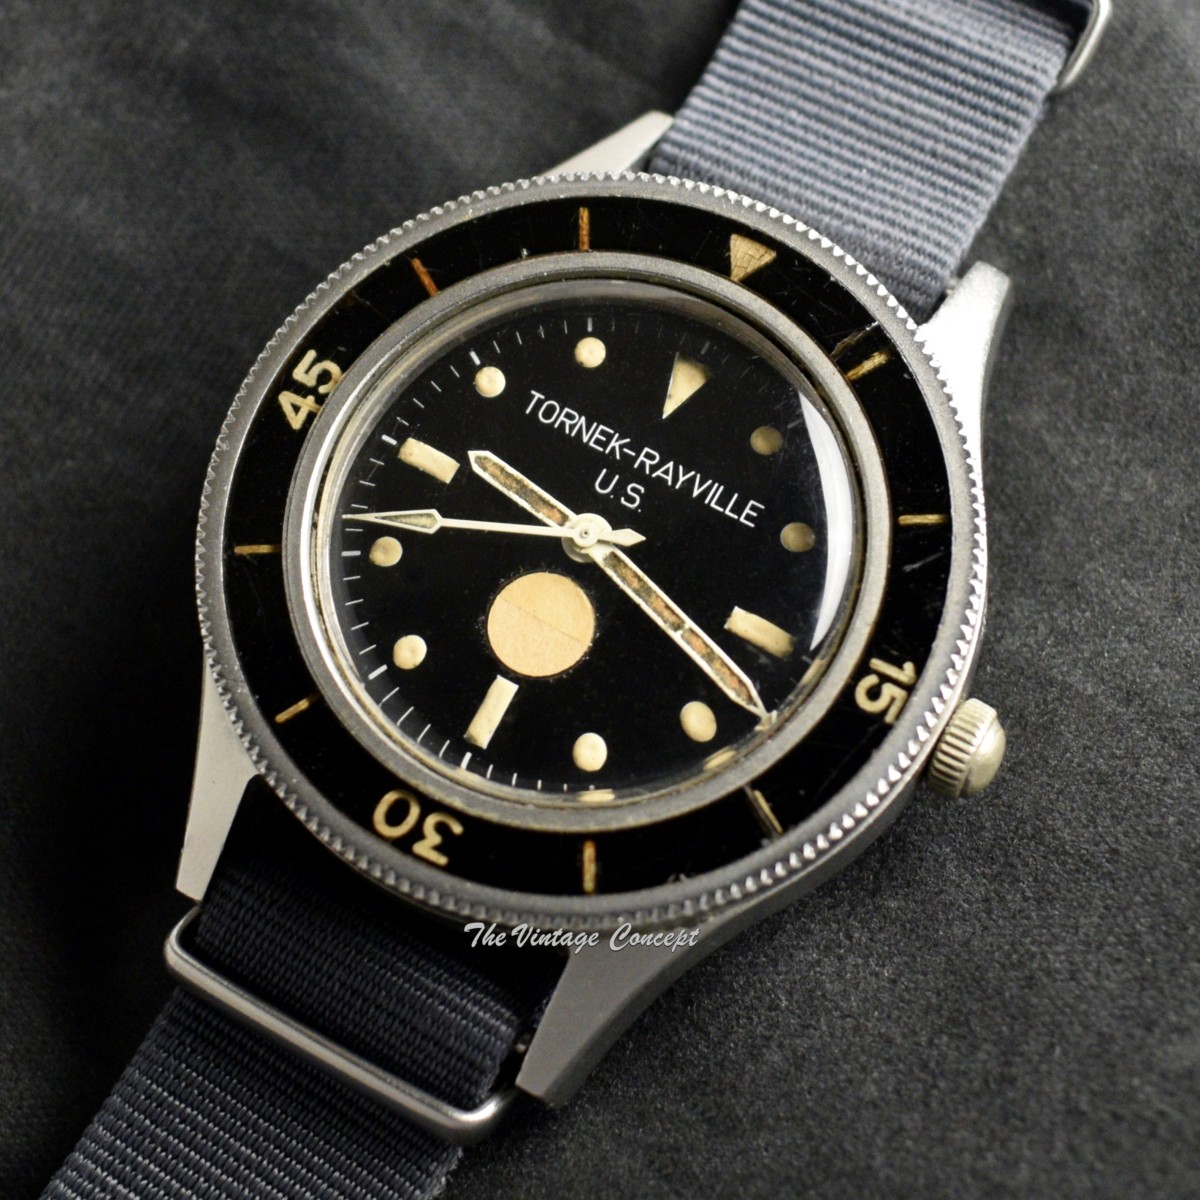 Blancpain Tornek Rayville TR900 U.S. Military Diver Watch